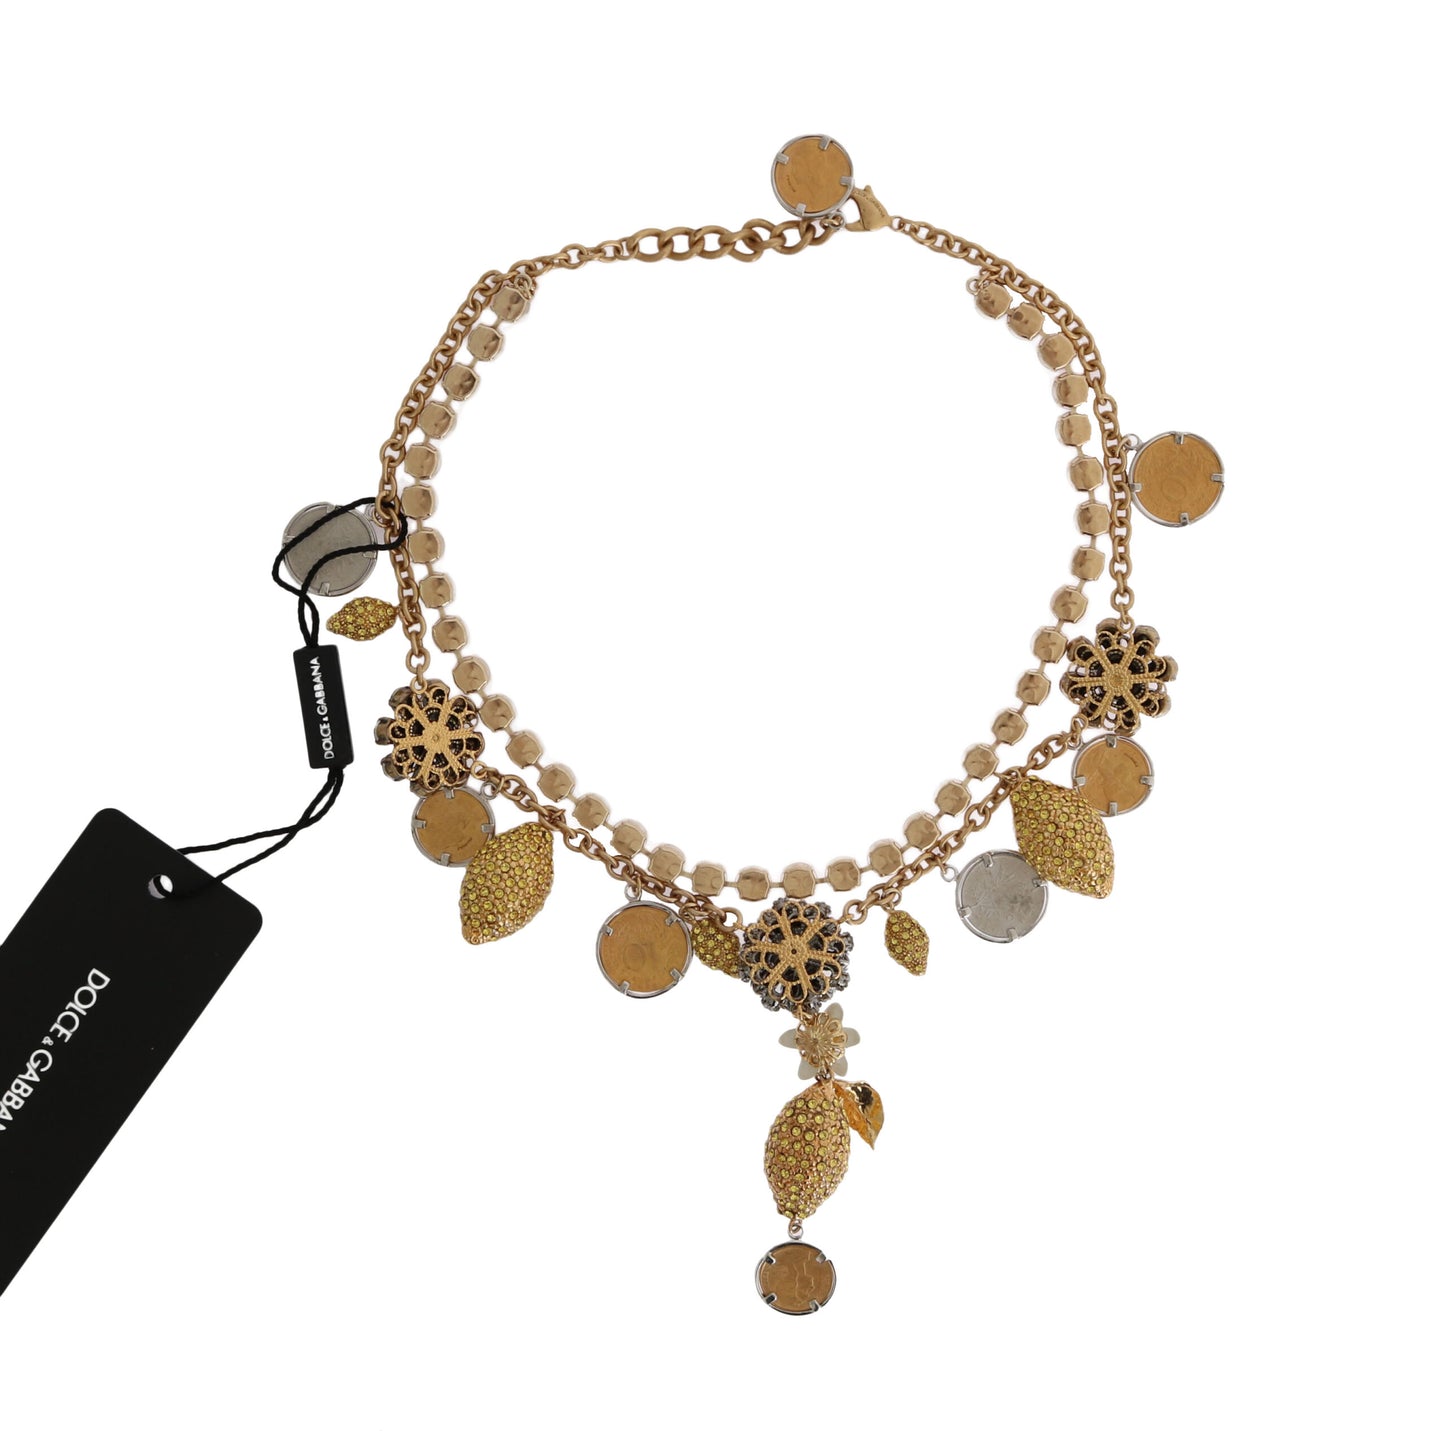 Dolce & Gabbana Elegant Gold-Plated Statement Necklace